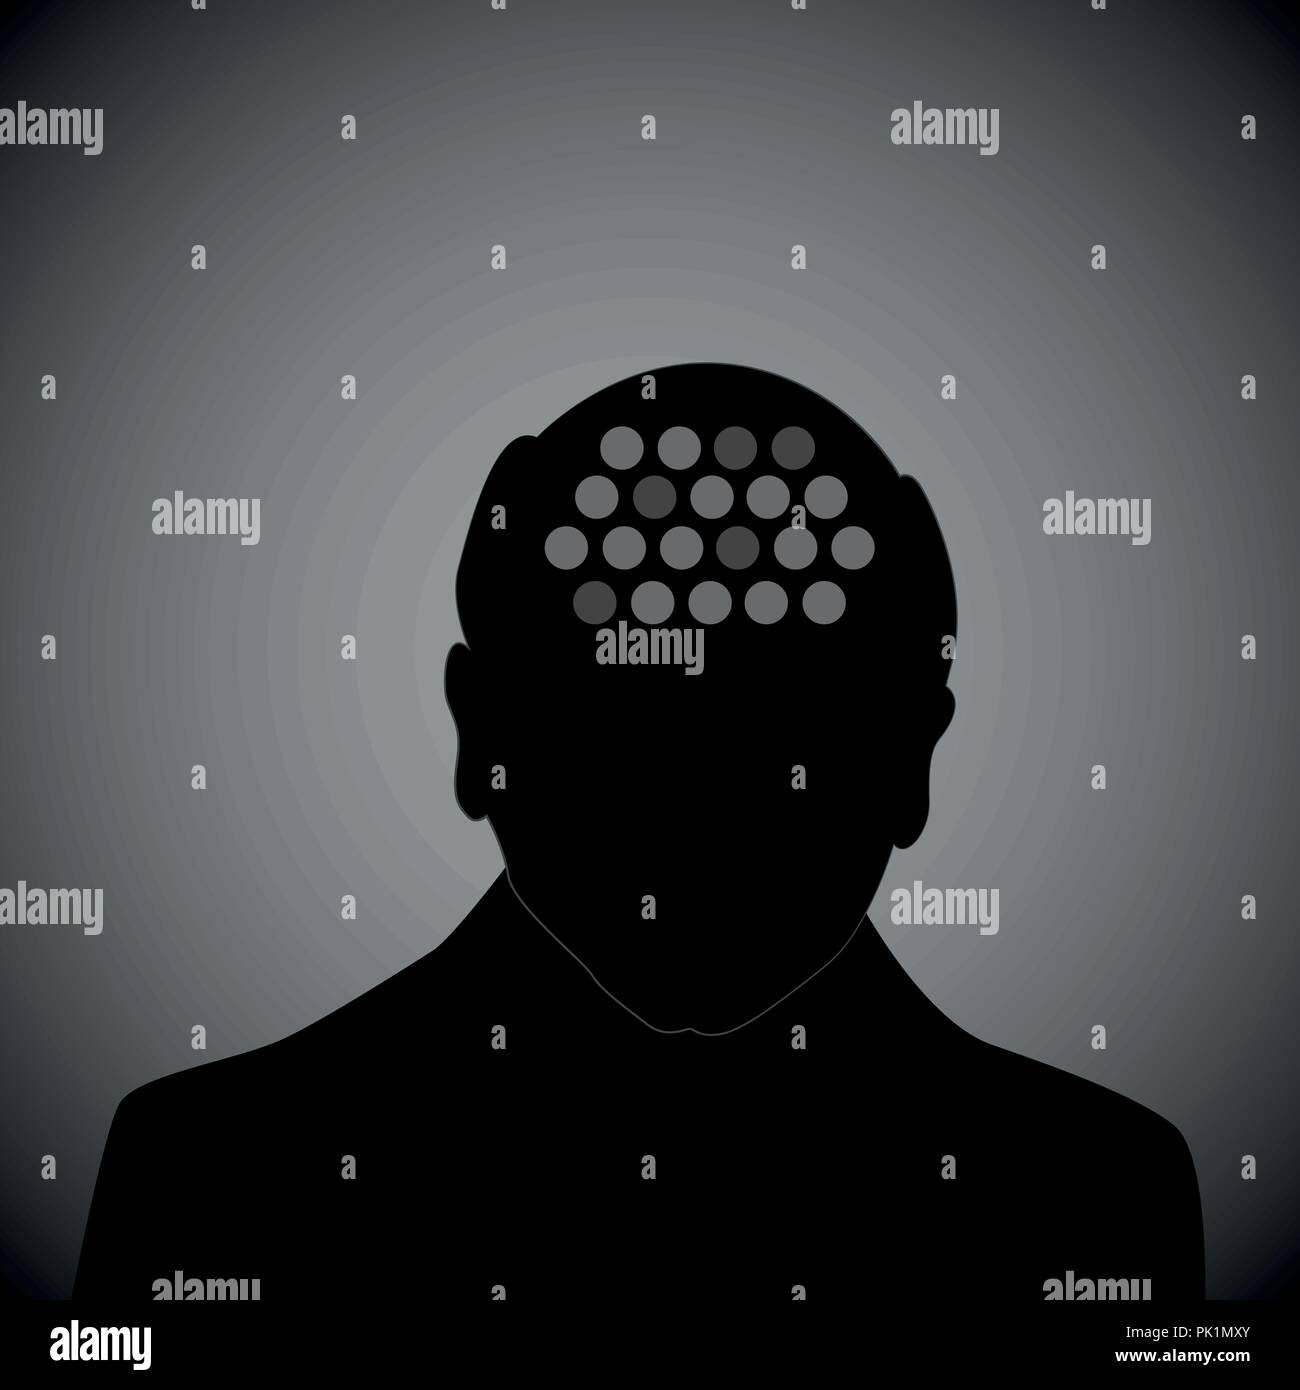 Alter Mann silhouette menschlichen Kopf Alzheimer Demenz Vektor-illustration EPS 10. Stock Vektor